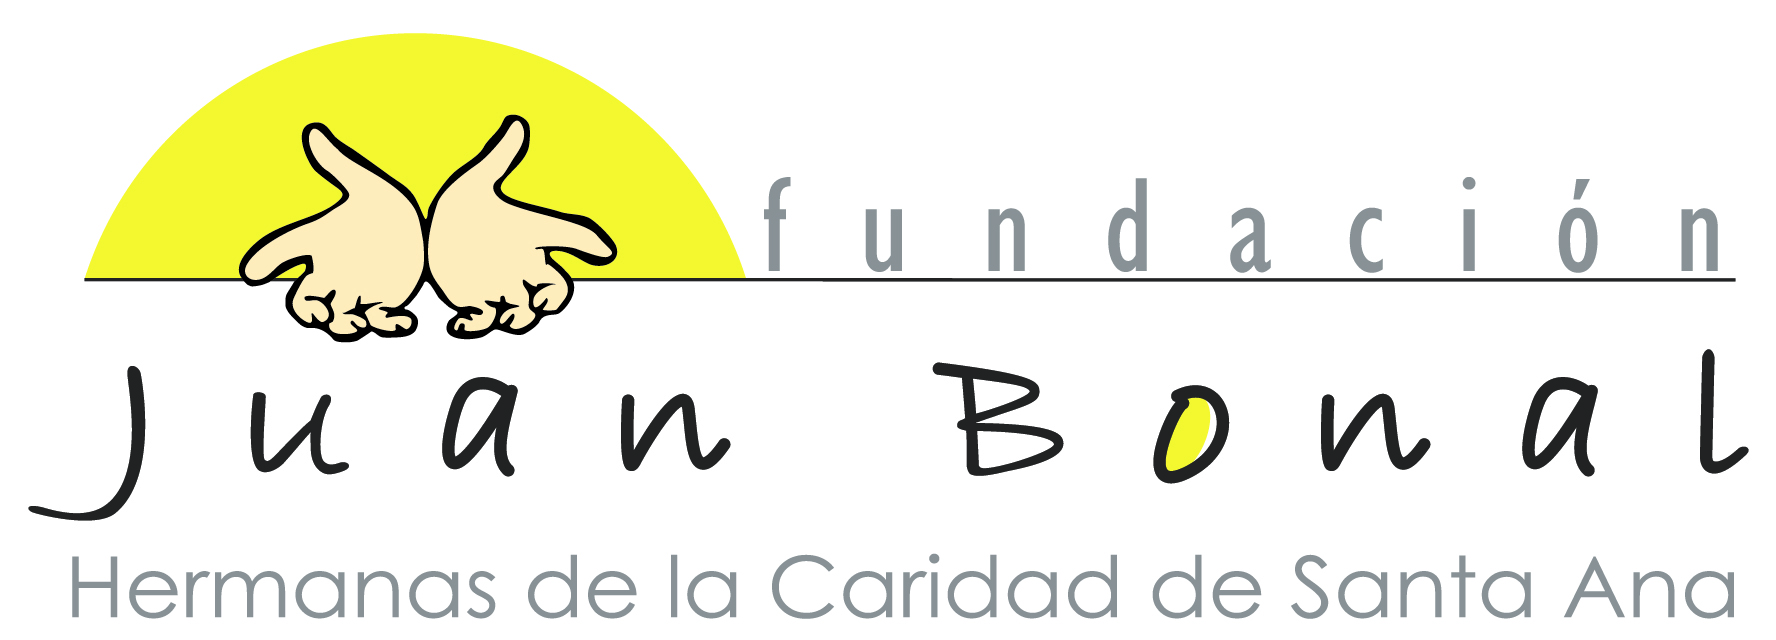 17 07 09 Logo FJB Con Hnas Fondo Blanco